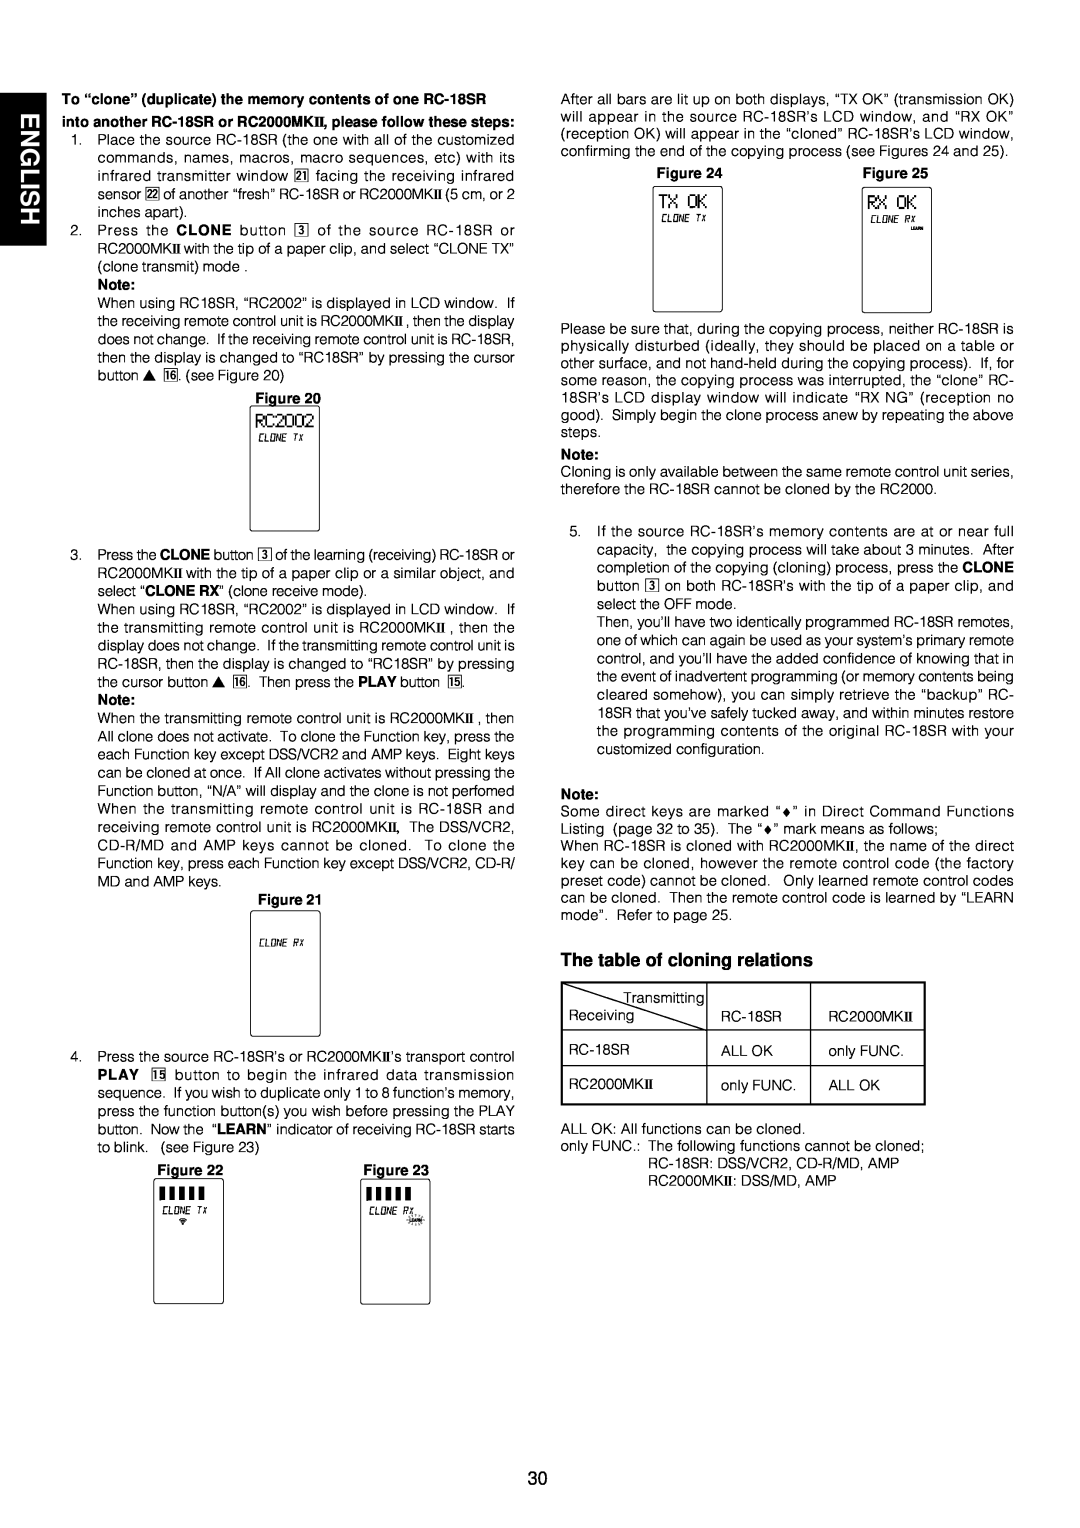 Marantz SR-18EX manual English, The table of cloning relations 